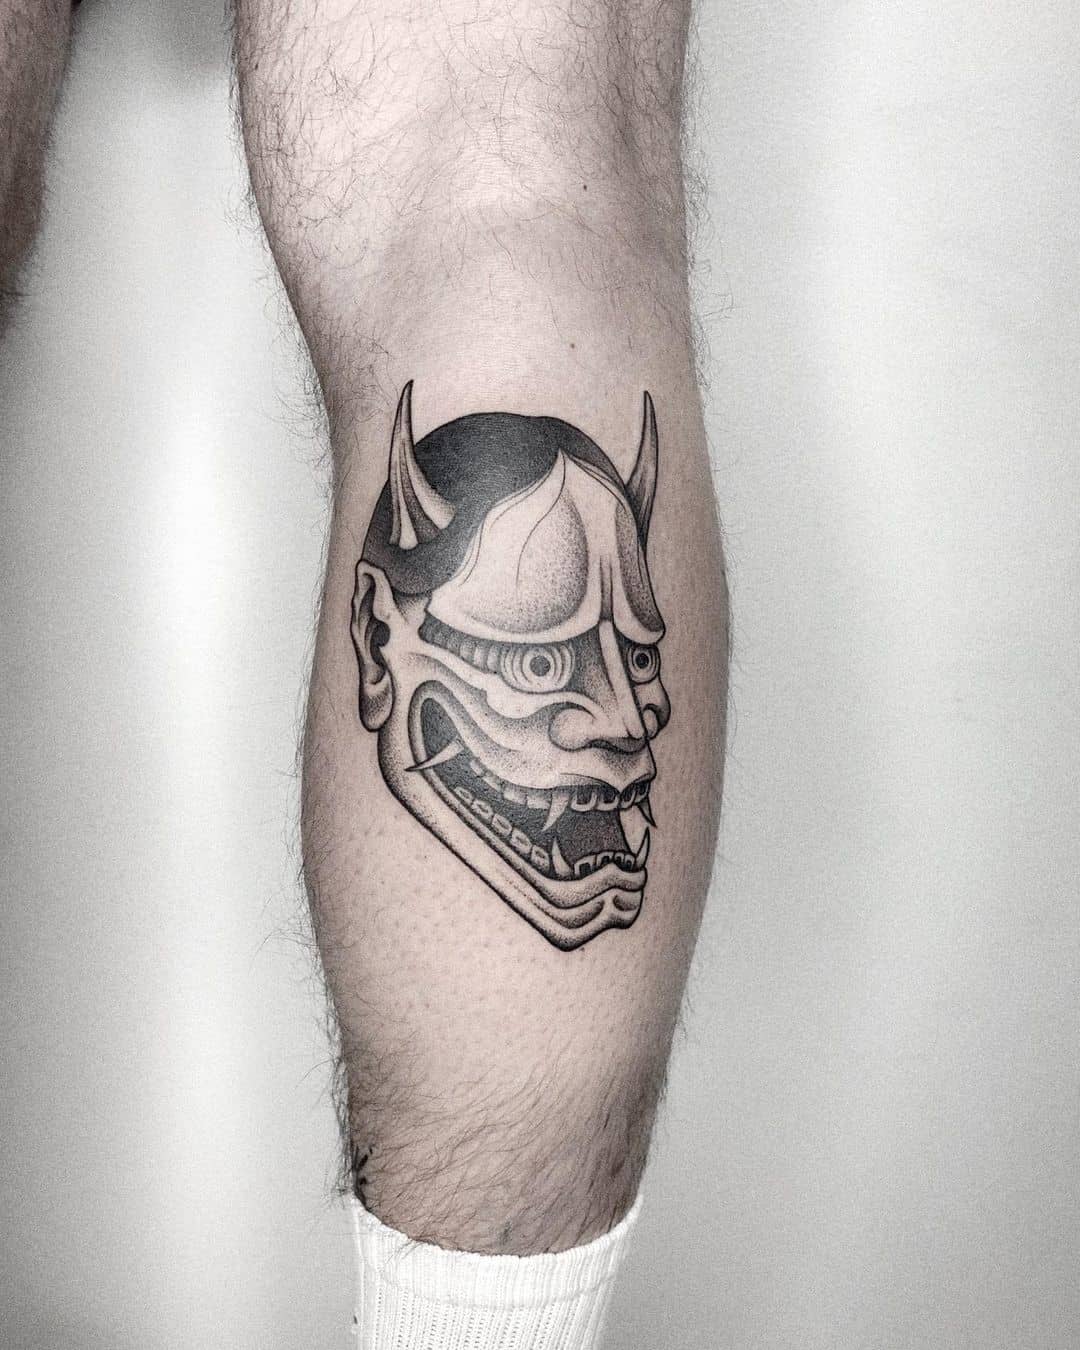 Idea del tatuaje de la pantorrilla del demonio